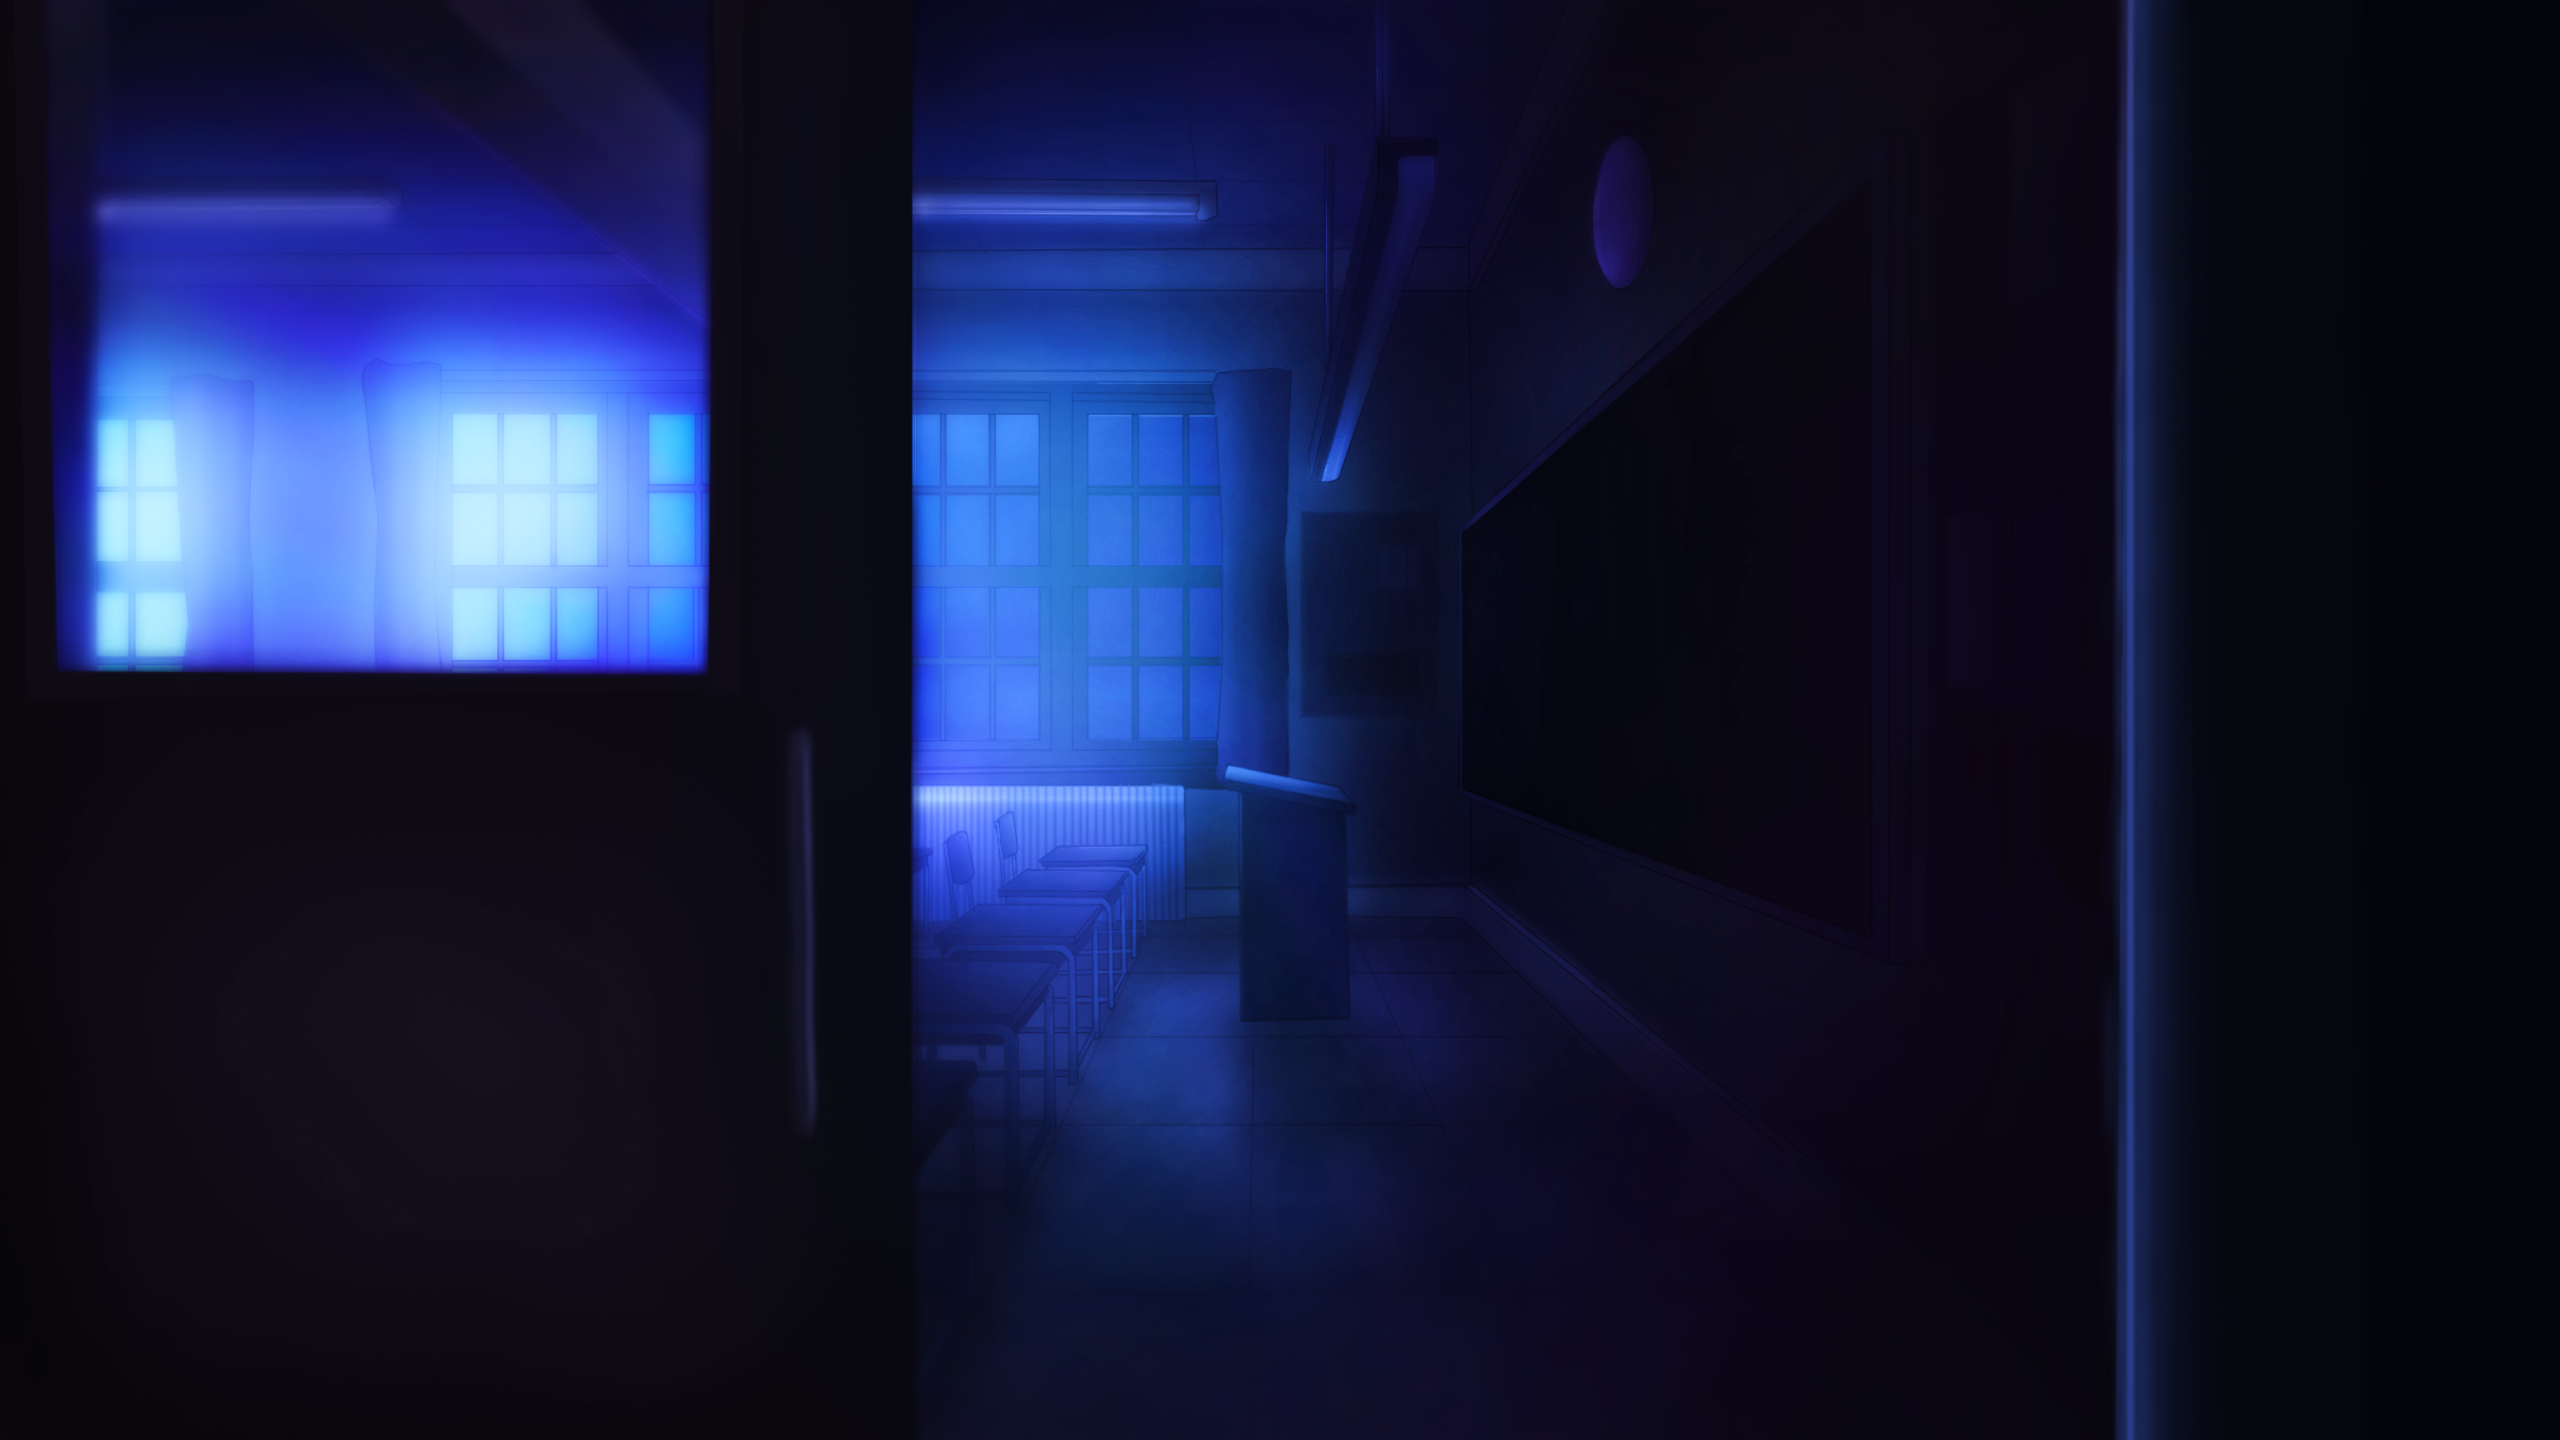 Classroom Entrance (Night) by Enigma-XIII on DeviantArt